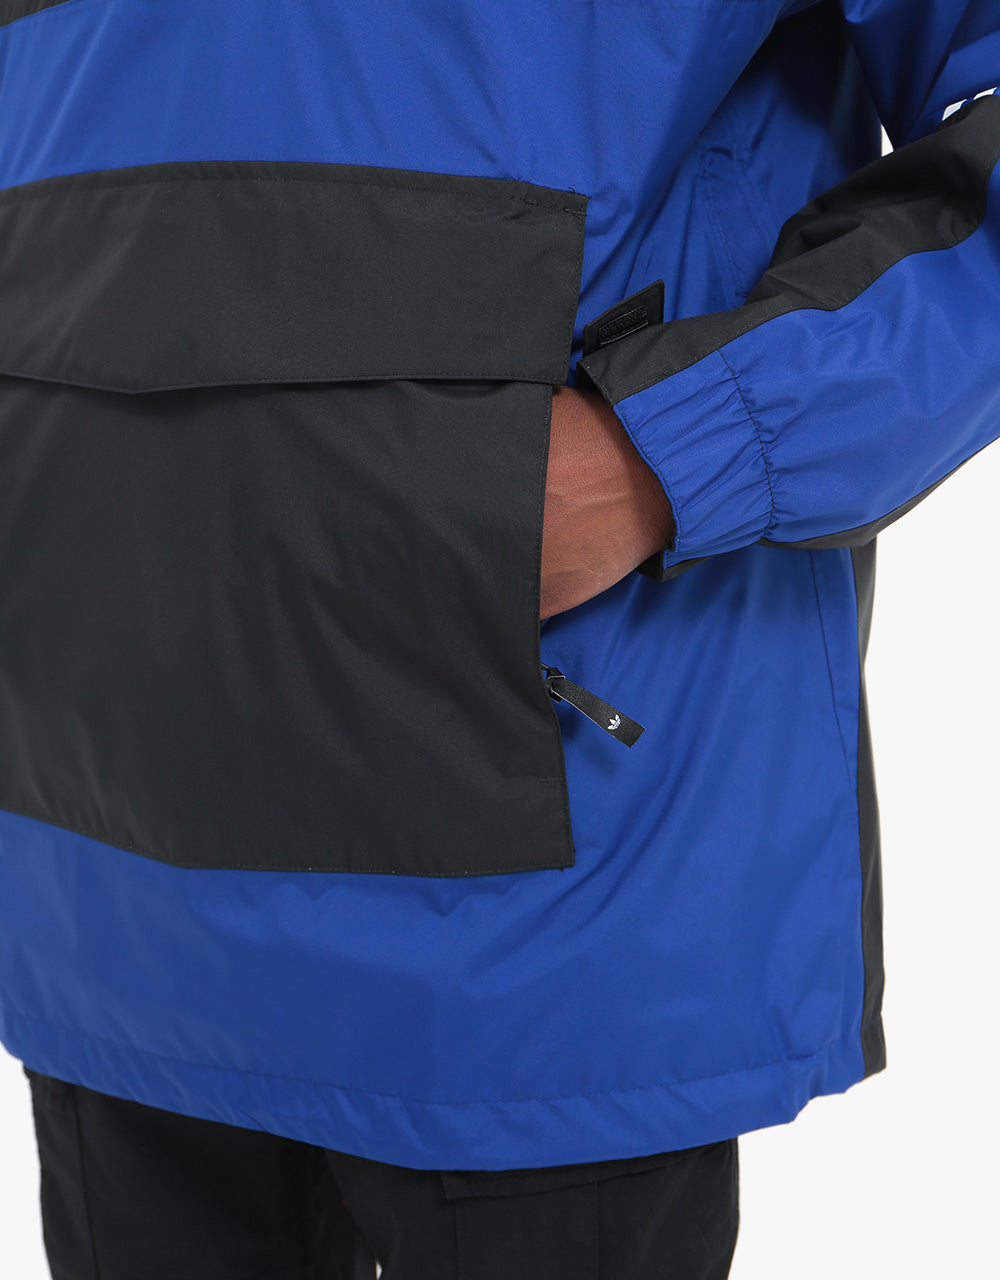 adidas Anorak Snowboard Jacket - Mystery Ink/Black/Ice Blue